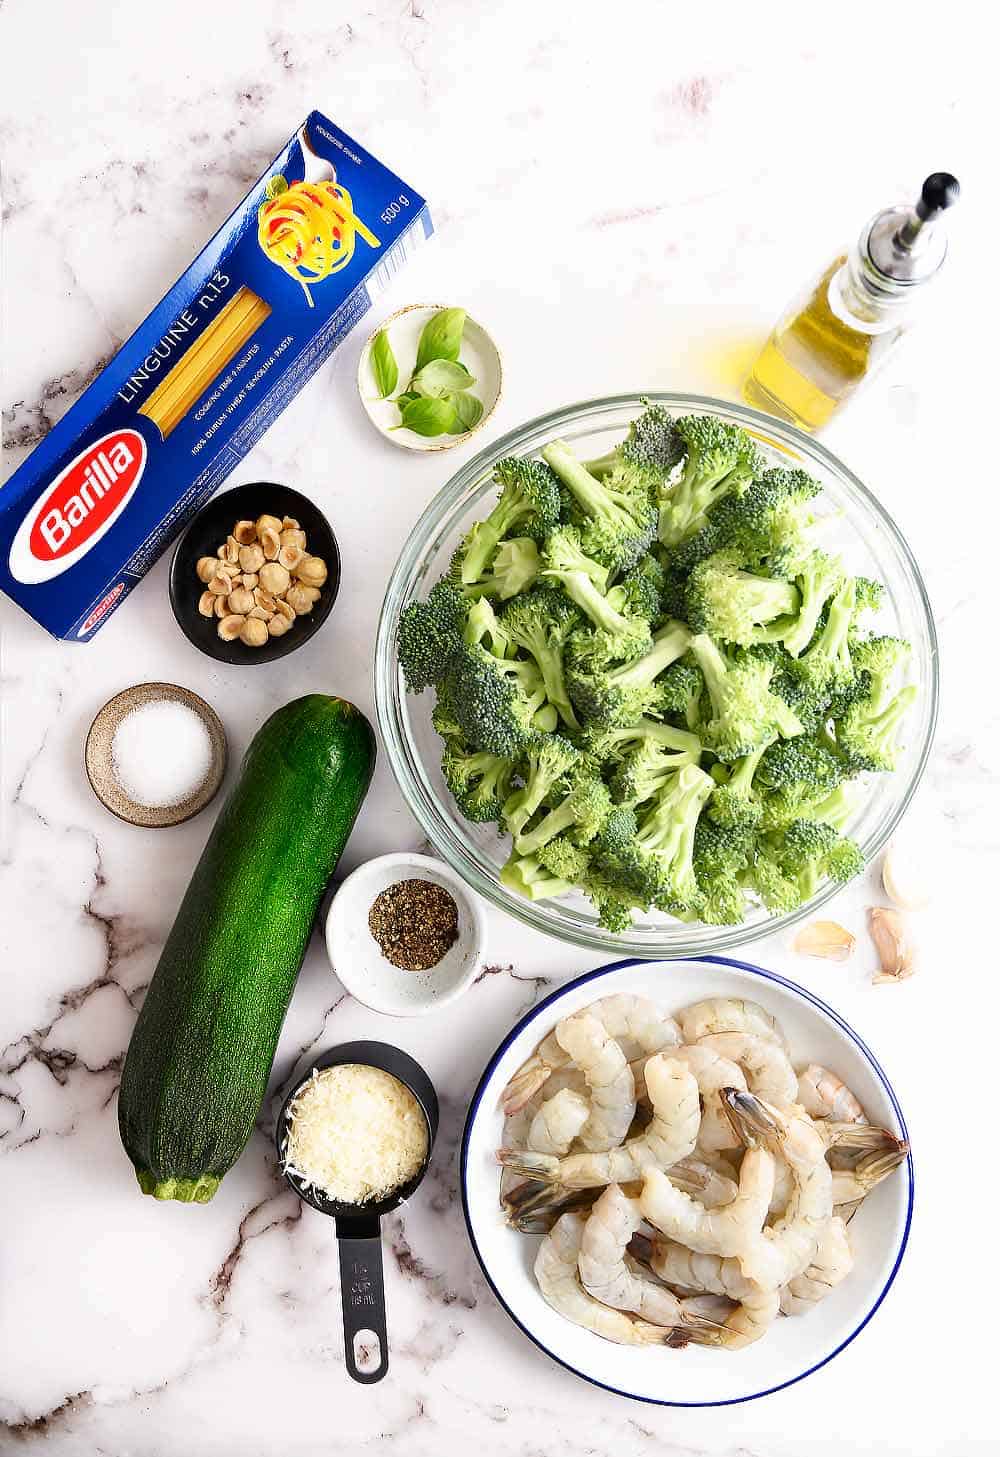 shrimp and broccoli pasta recipe